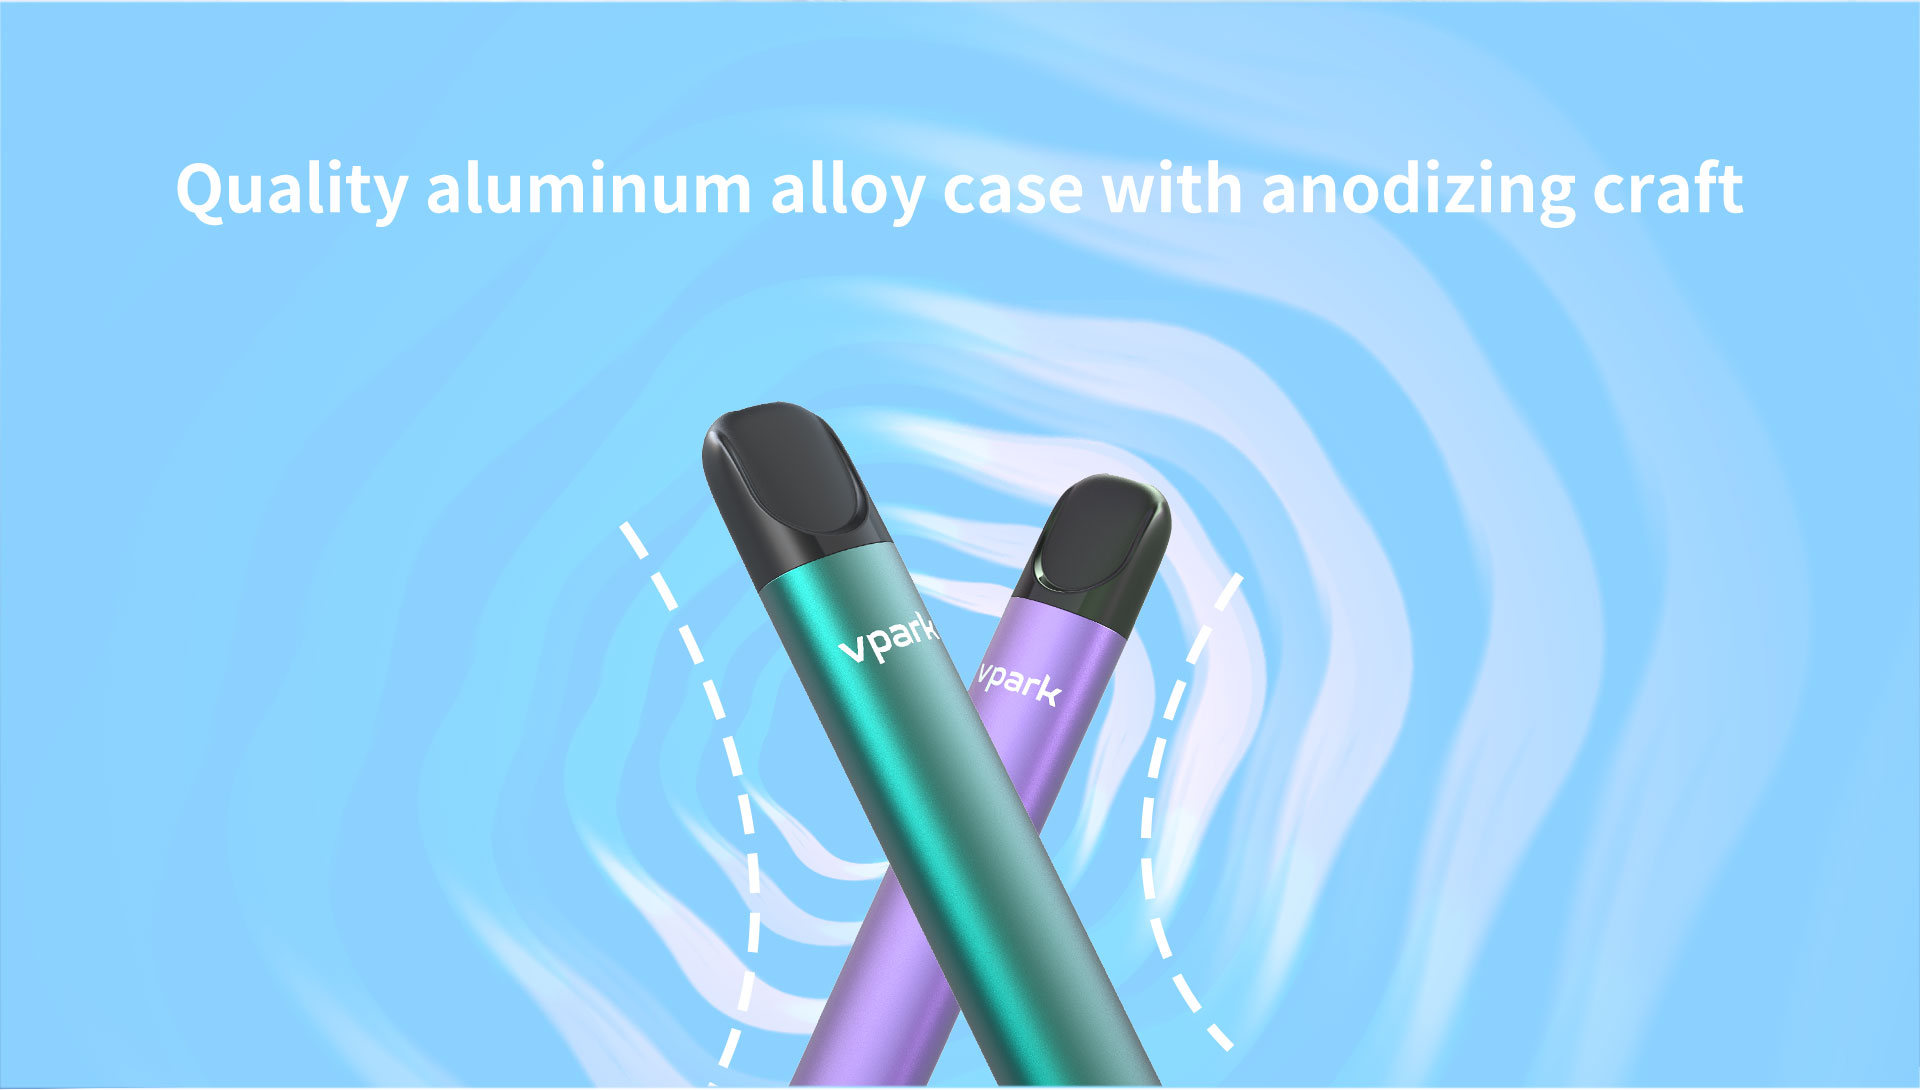 Aluminum alloy case with anodizing craft